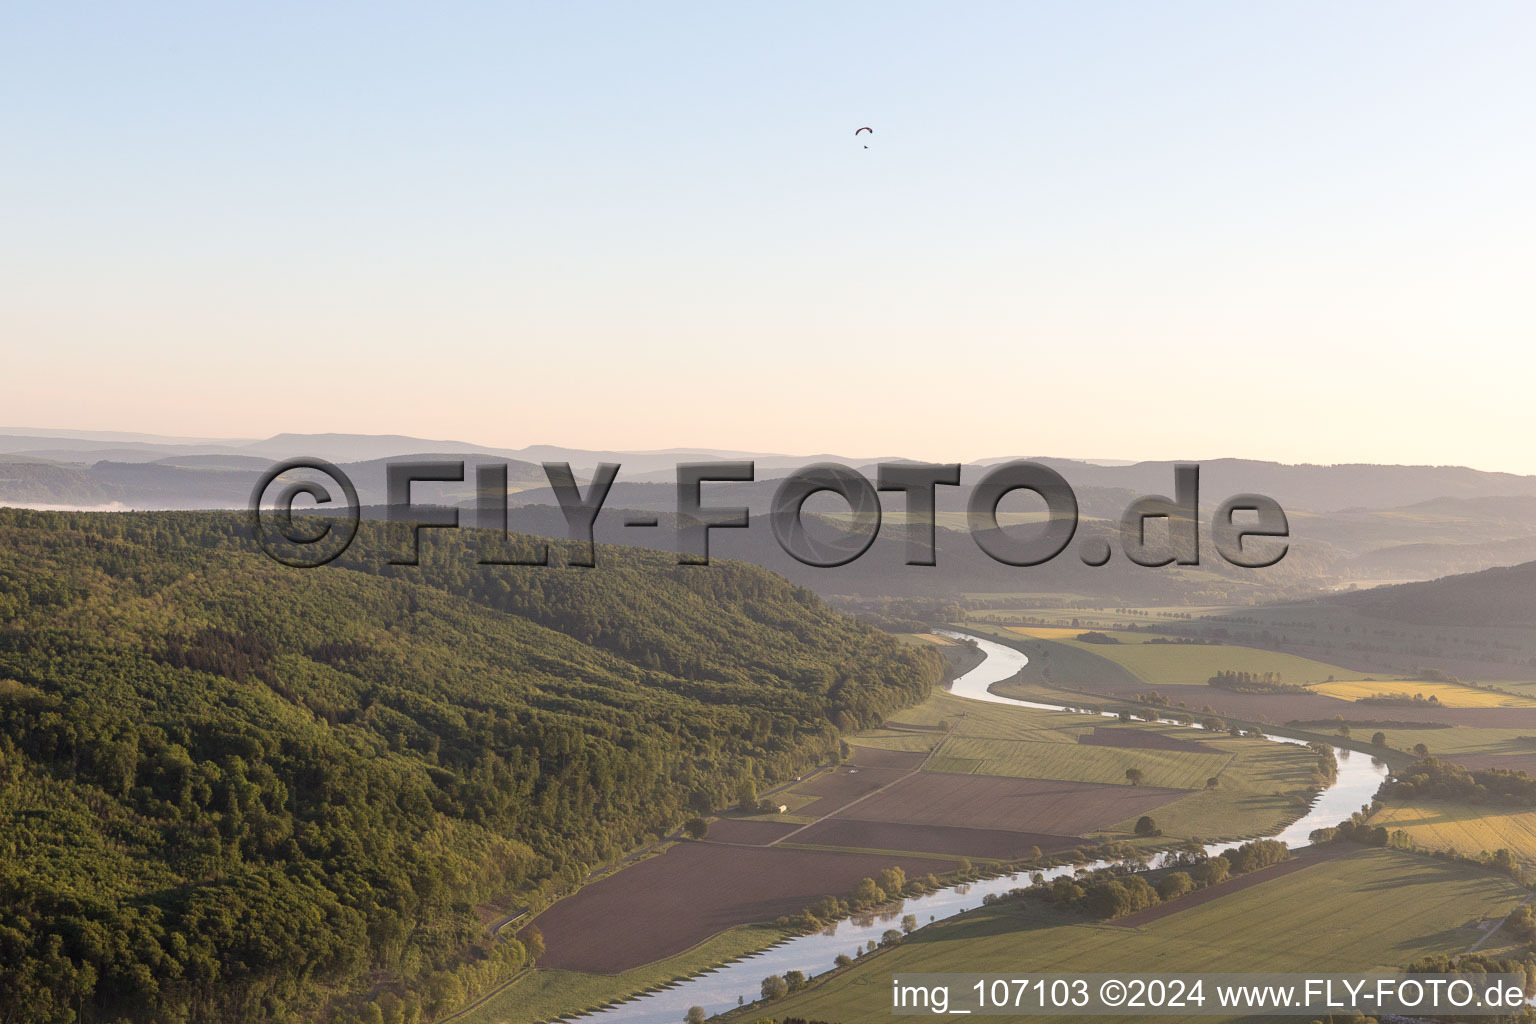 Aerial view of Stahle in the state North Rhine-Westphalia, Germany